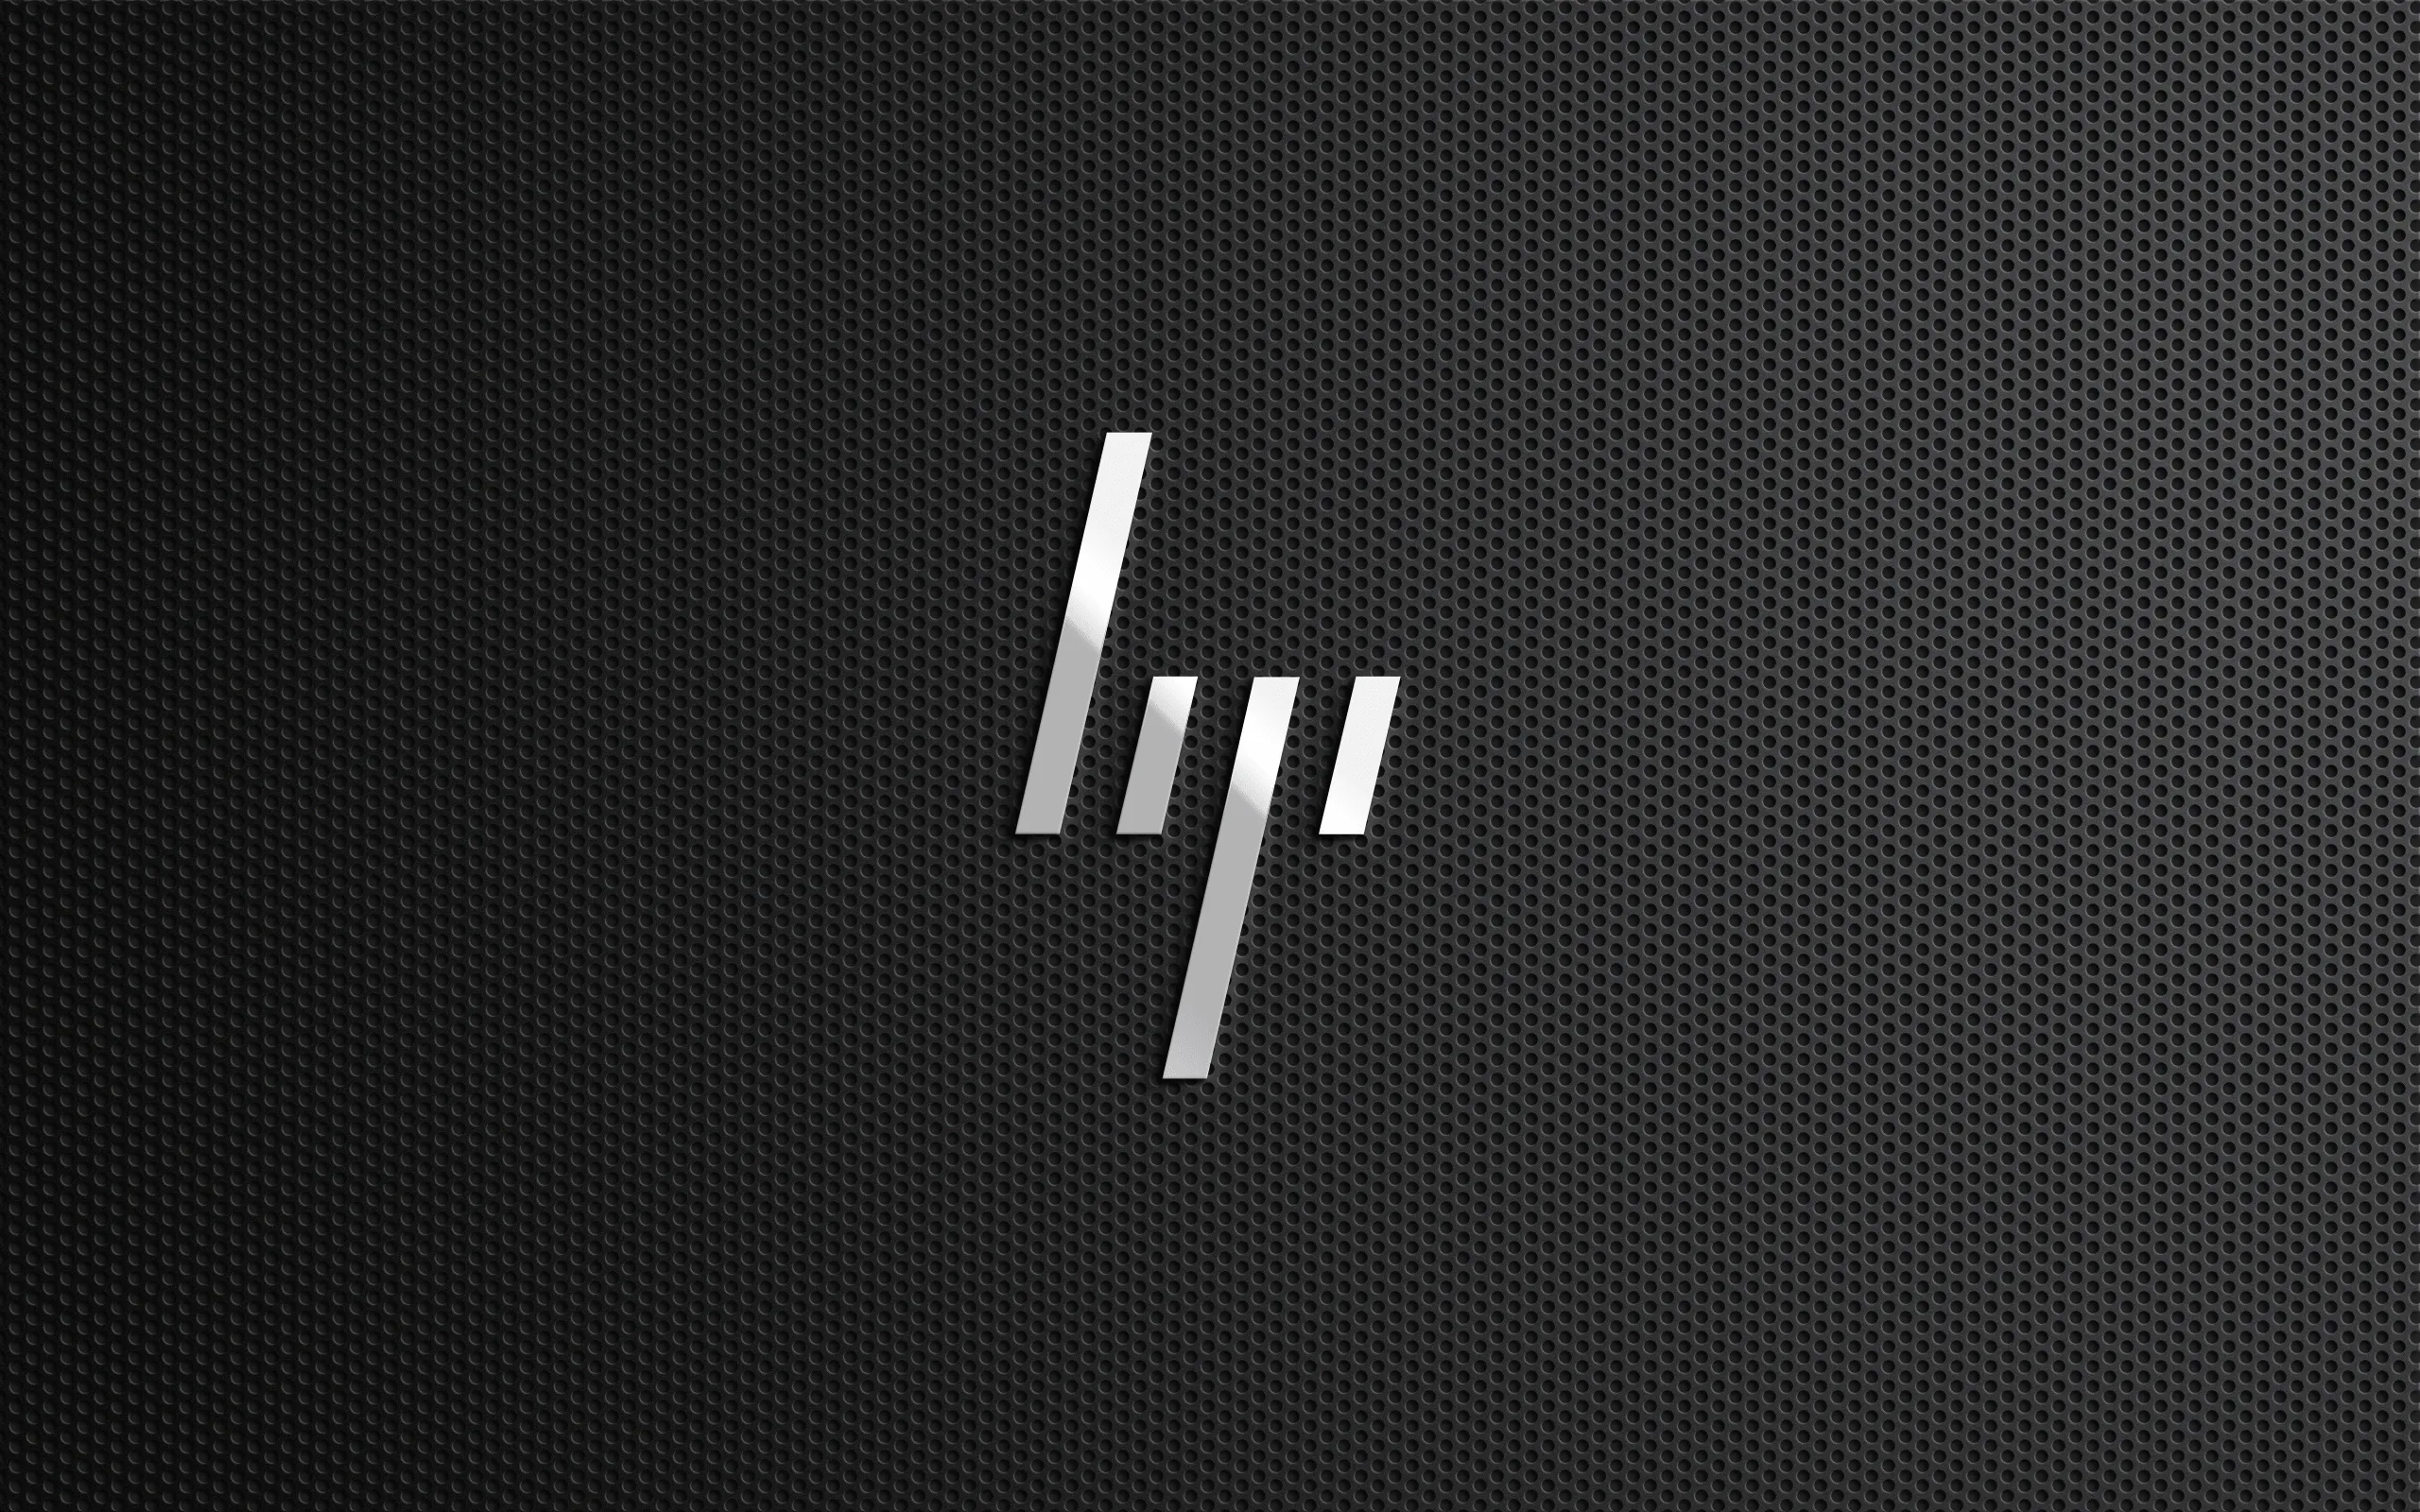 hp rebrand logo Wallpaper pack + psd by LeMarquis on DeviantArt